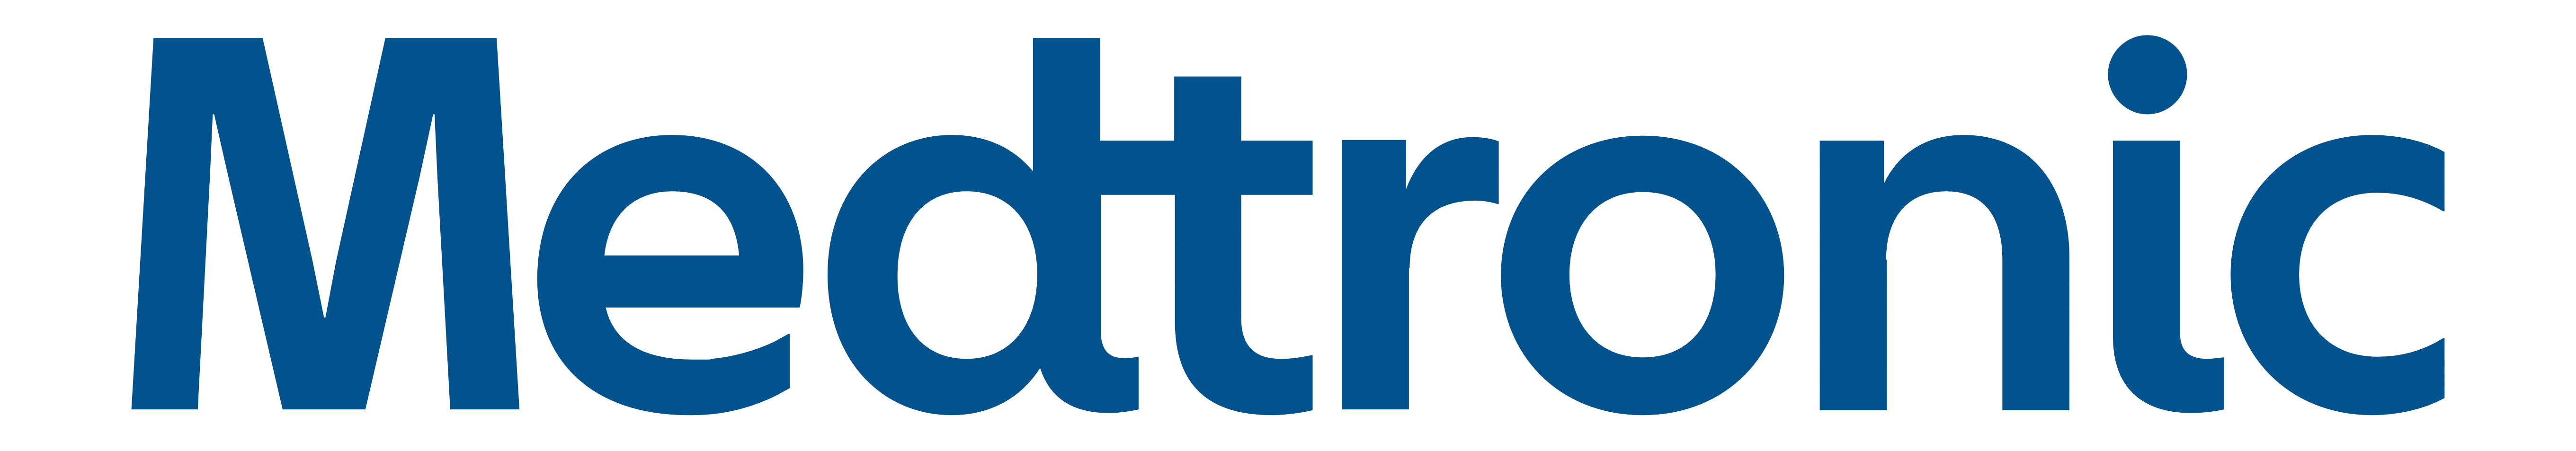 Medtronic logo, logotype